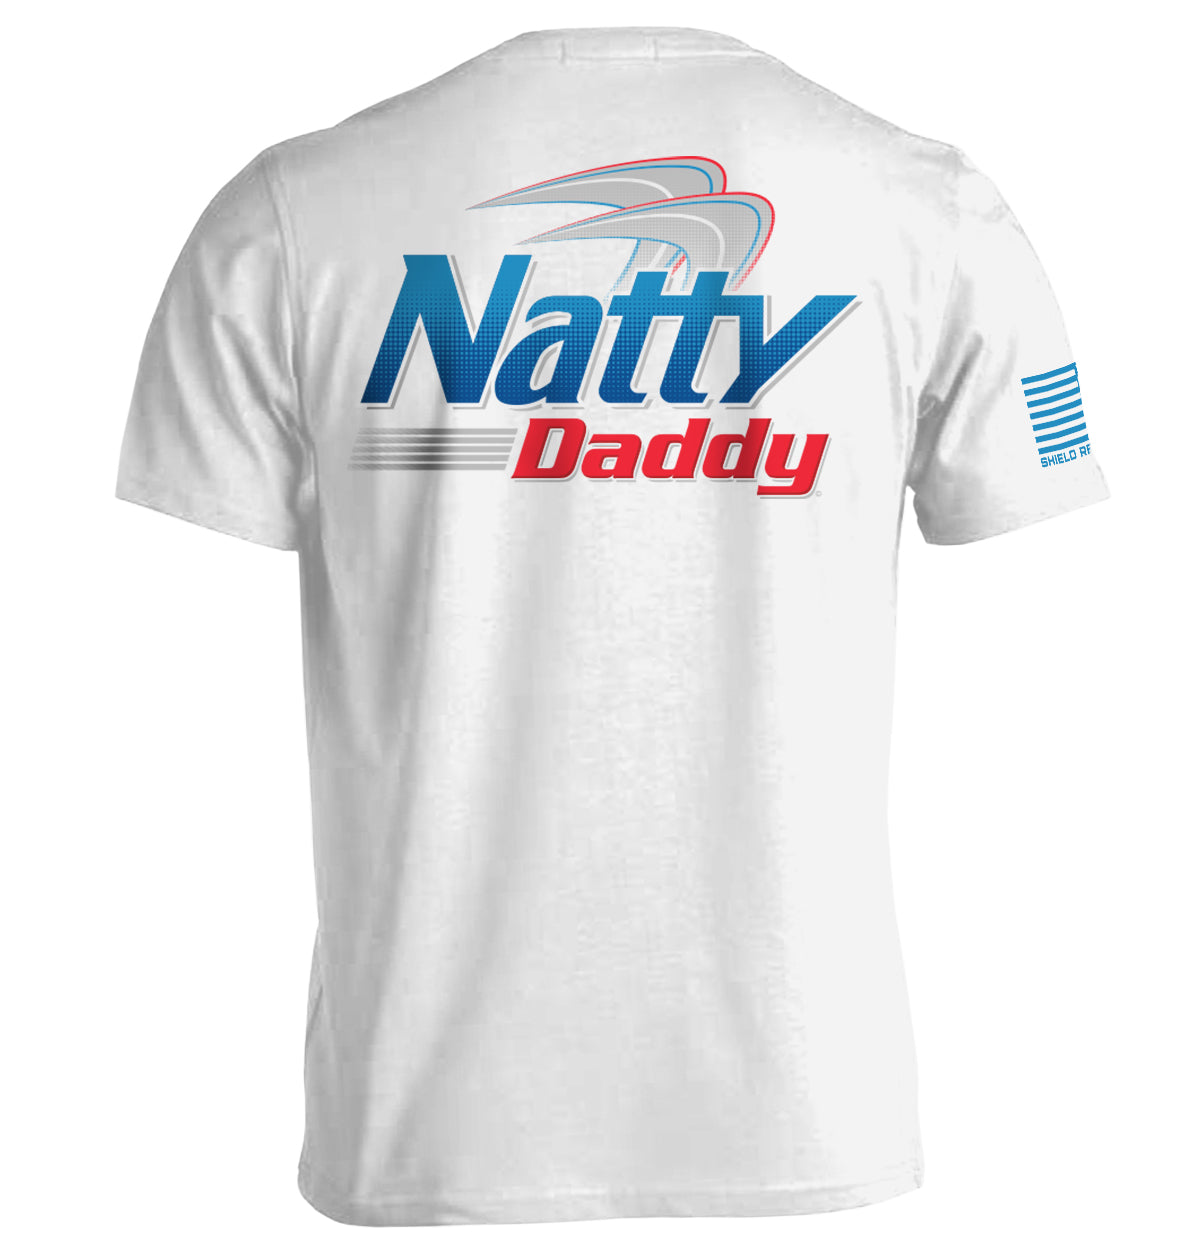 Natty Daddy Tee